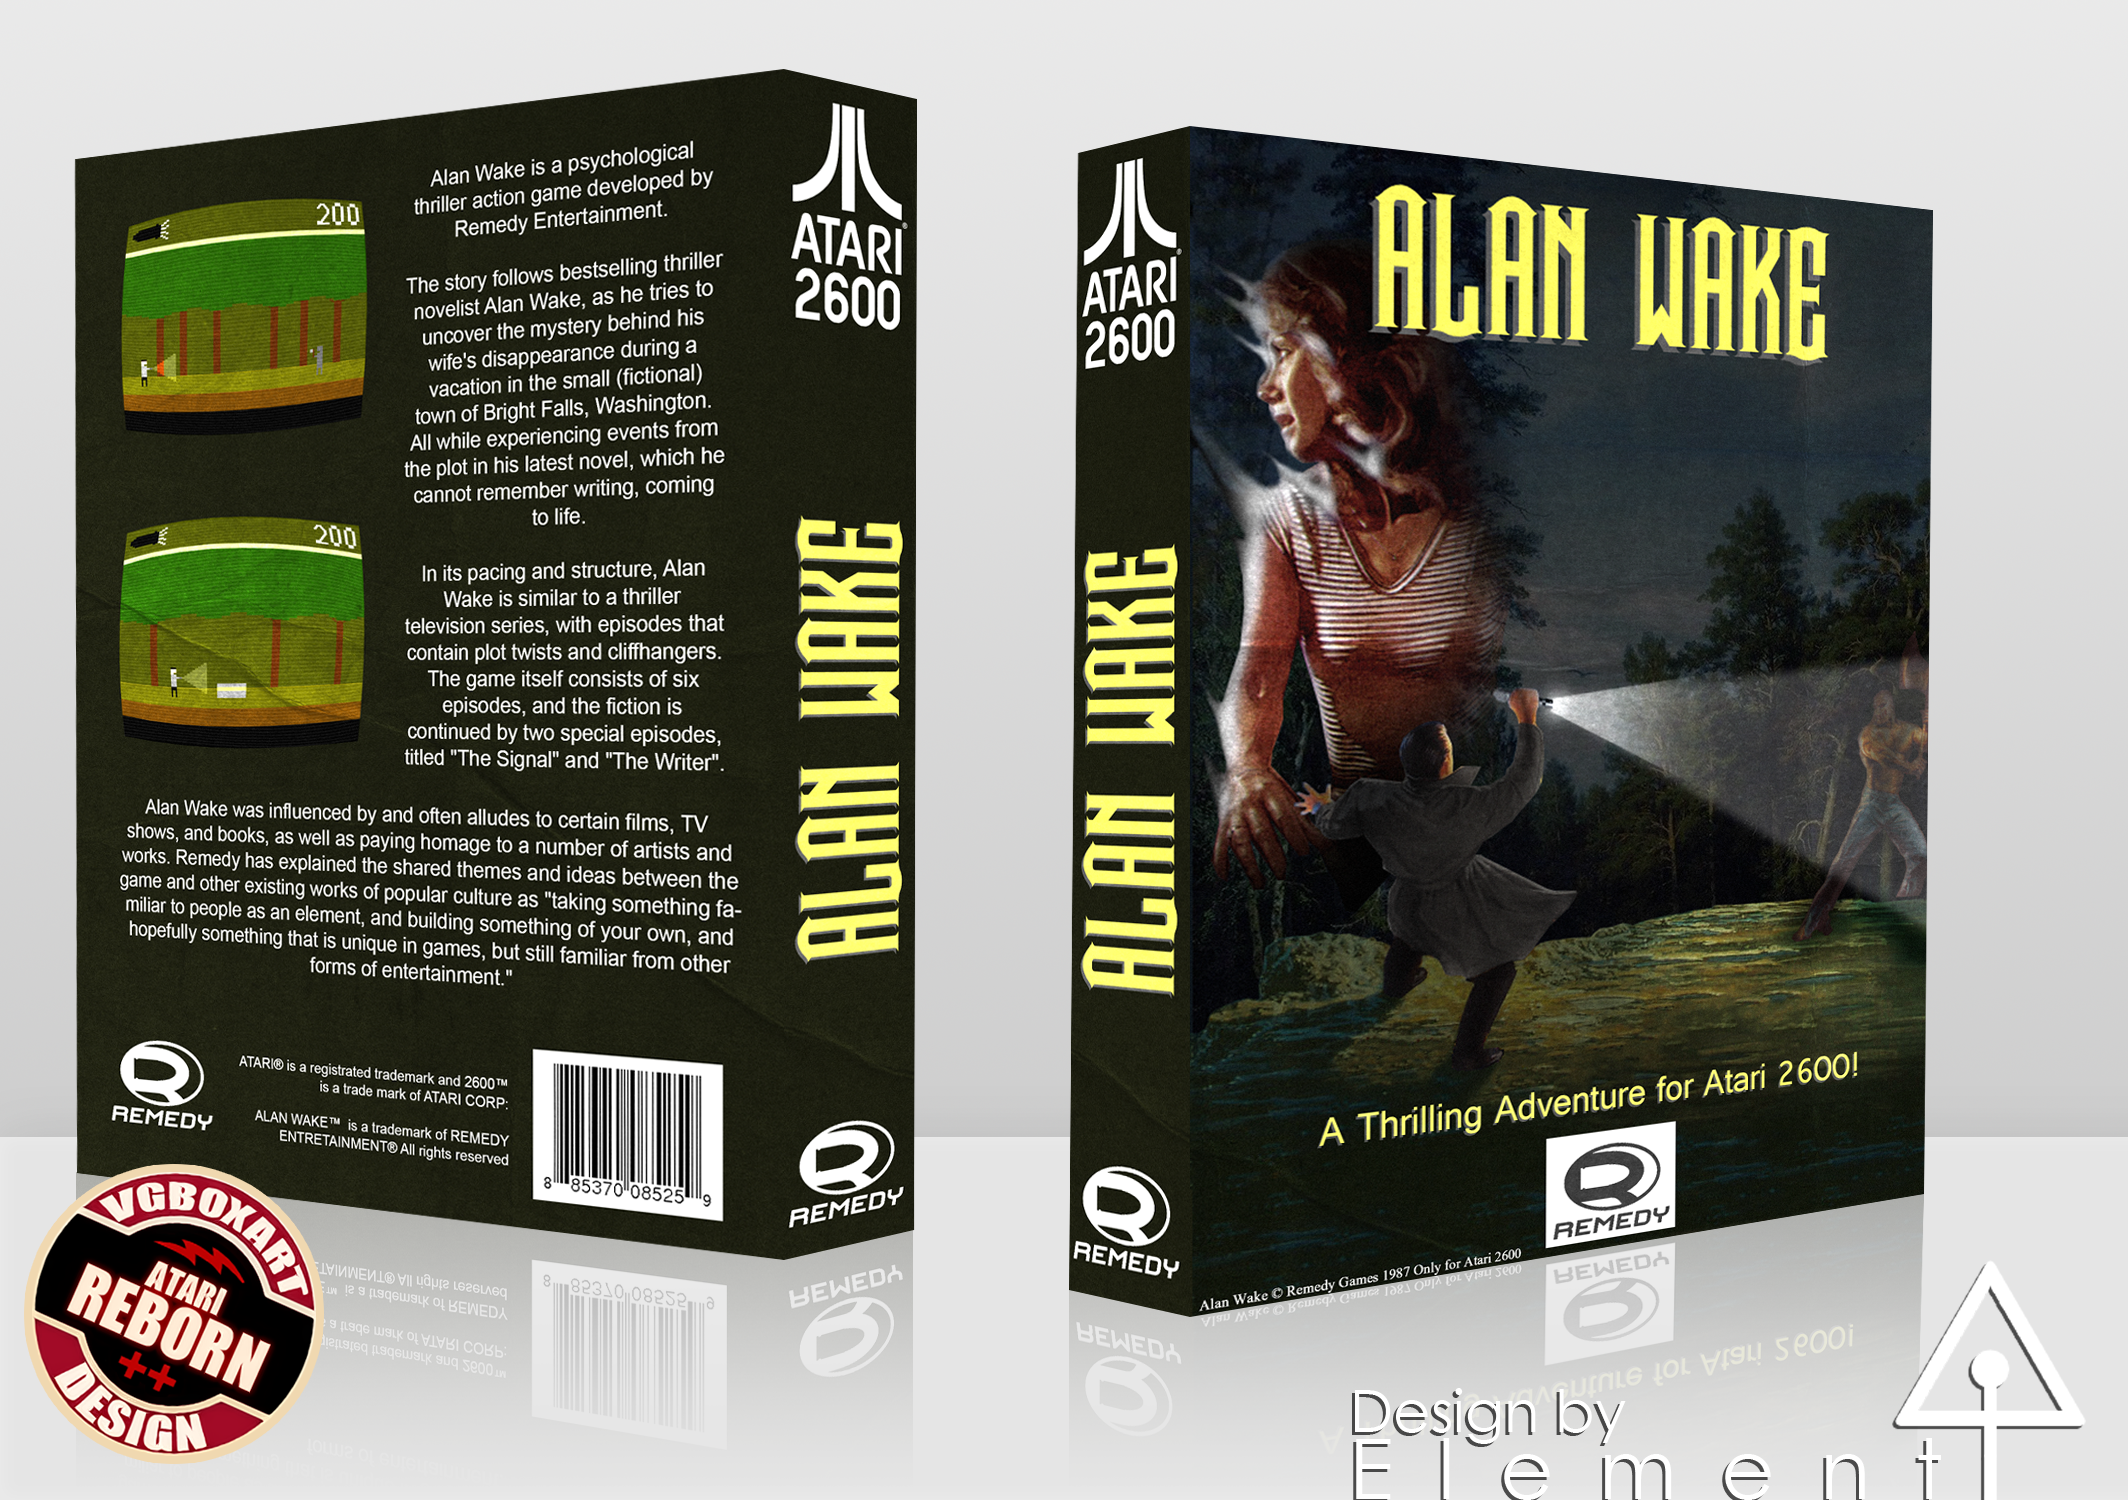 Alan Wake box cover